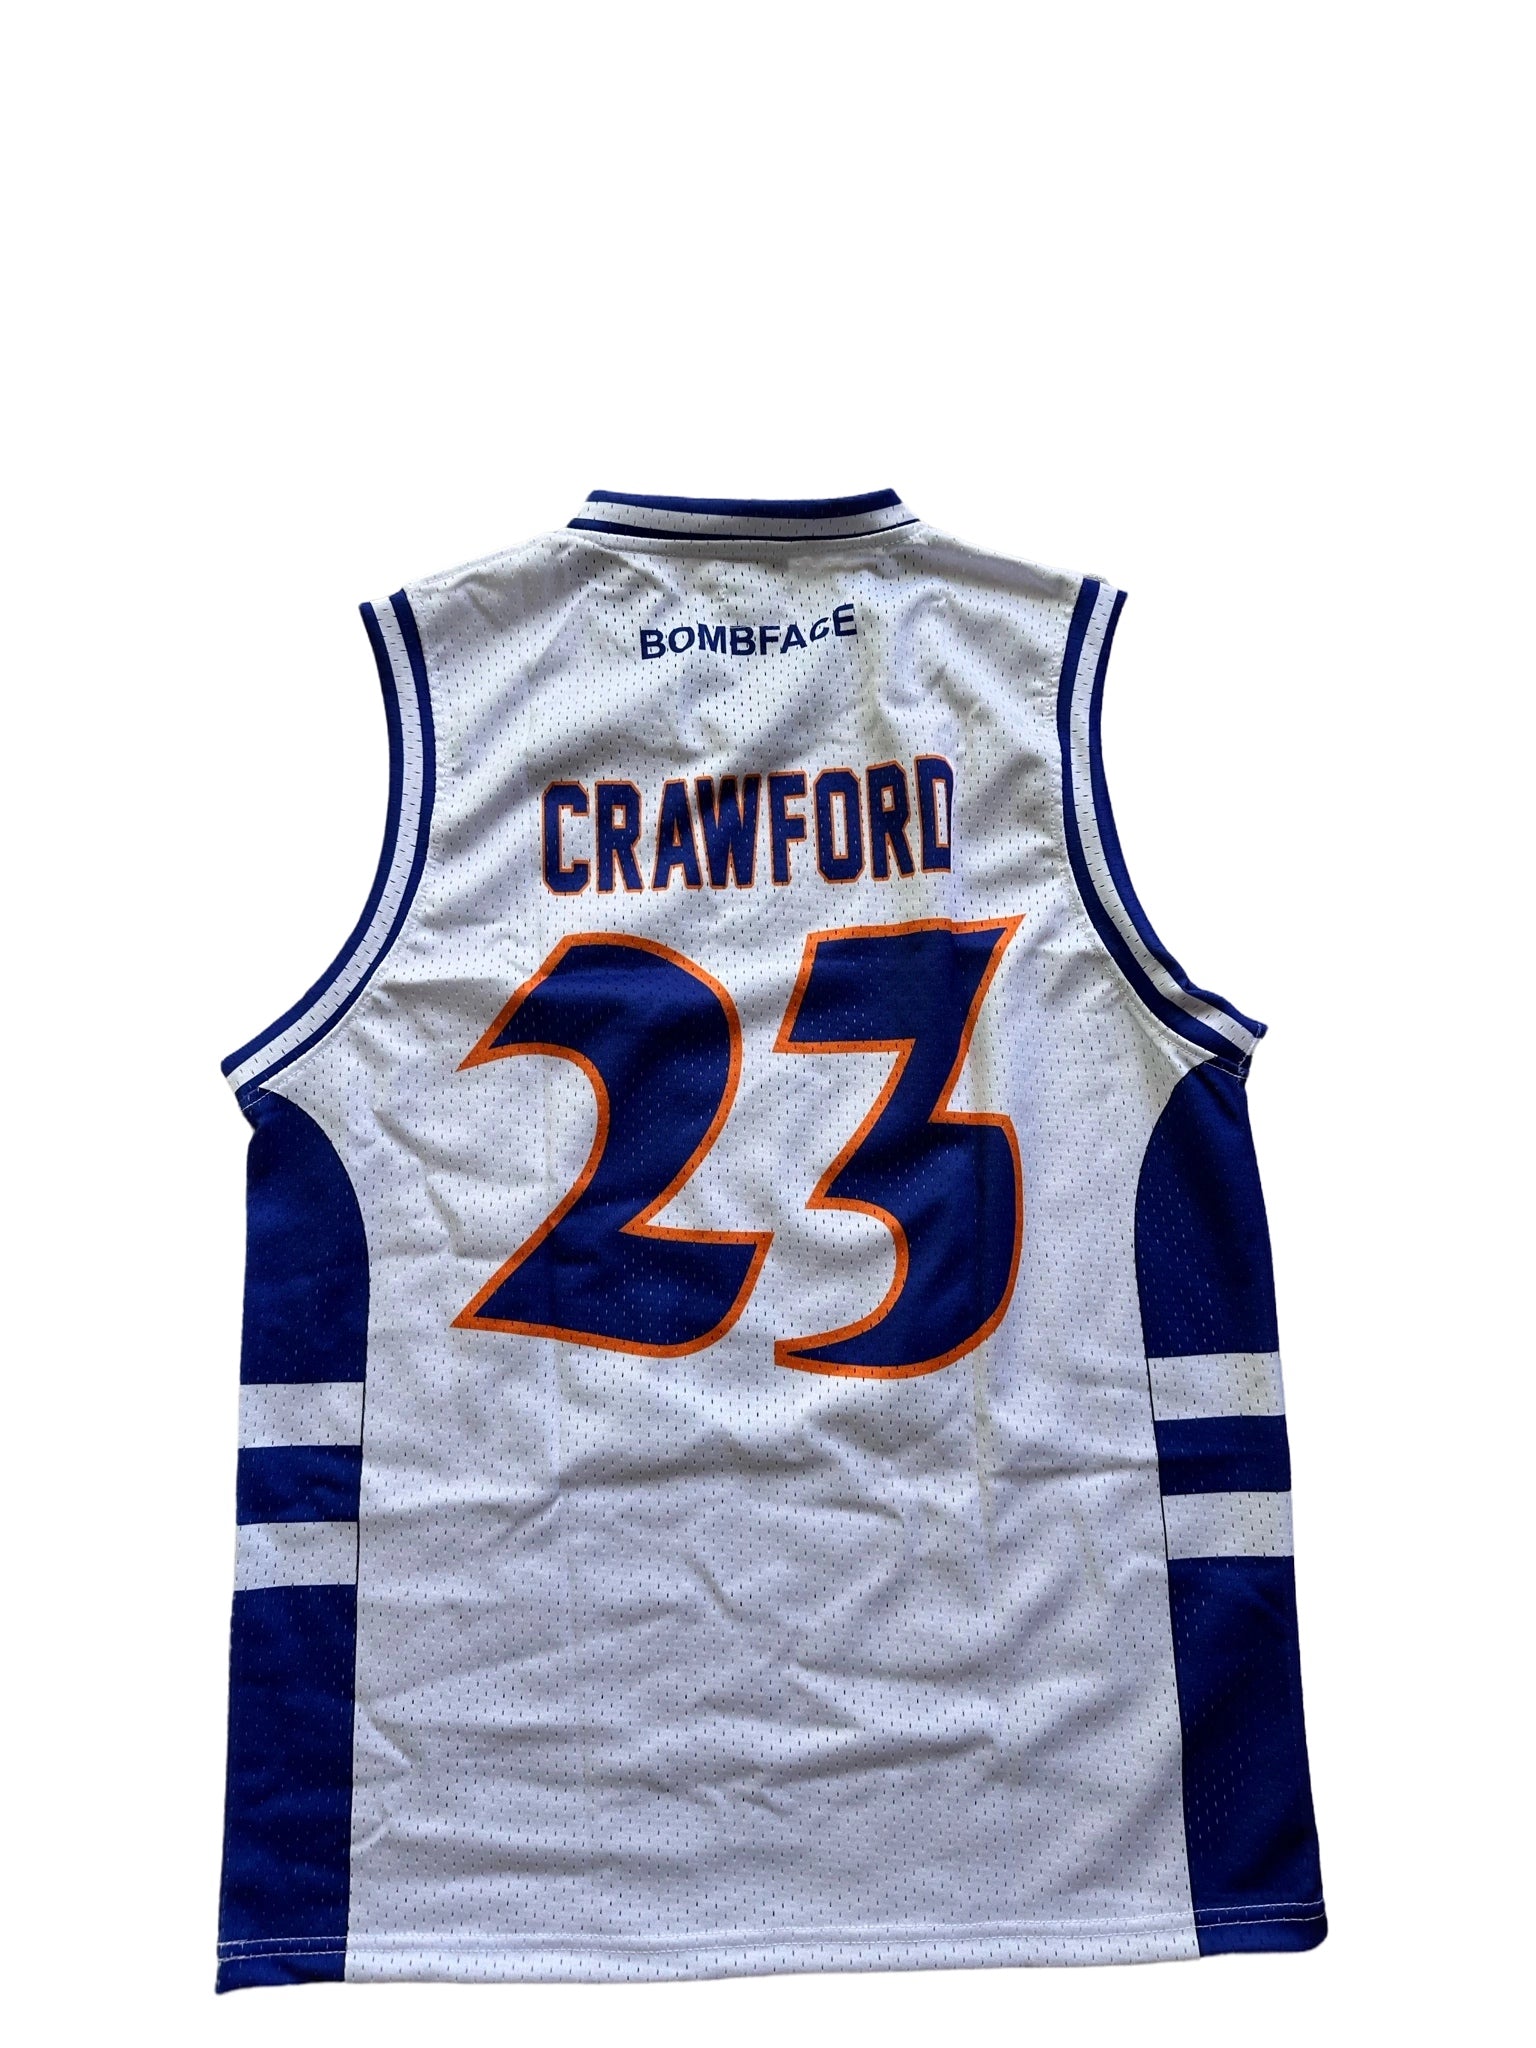 Jamal Crawford Jersey for sale